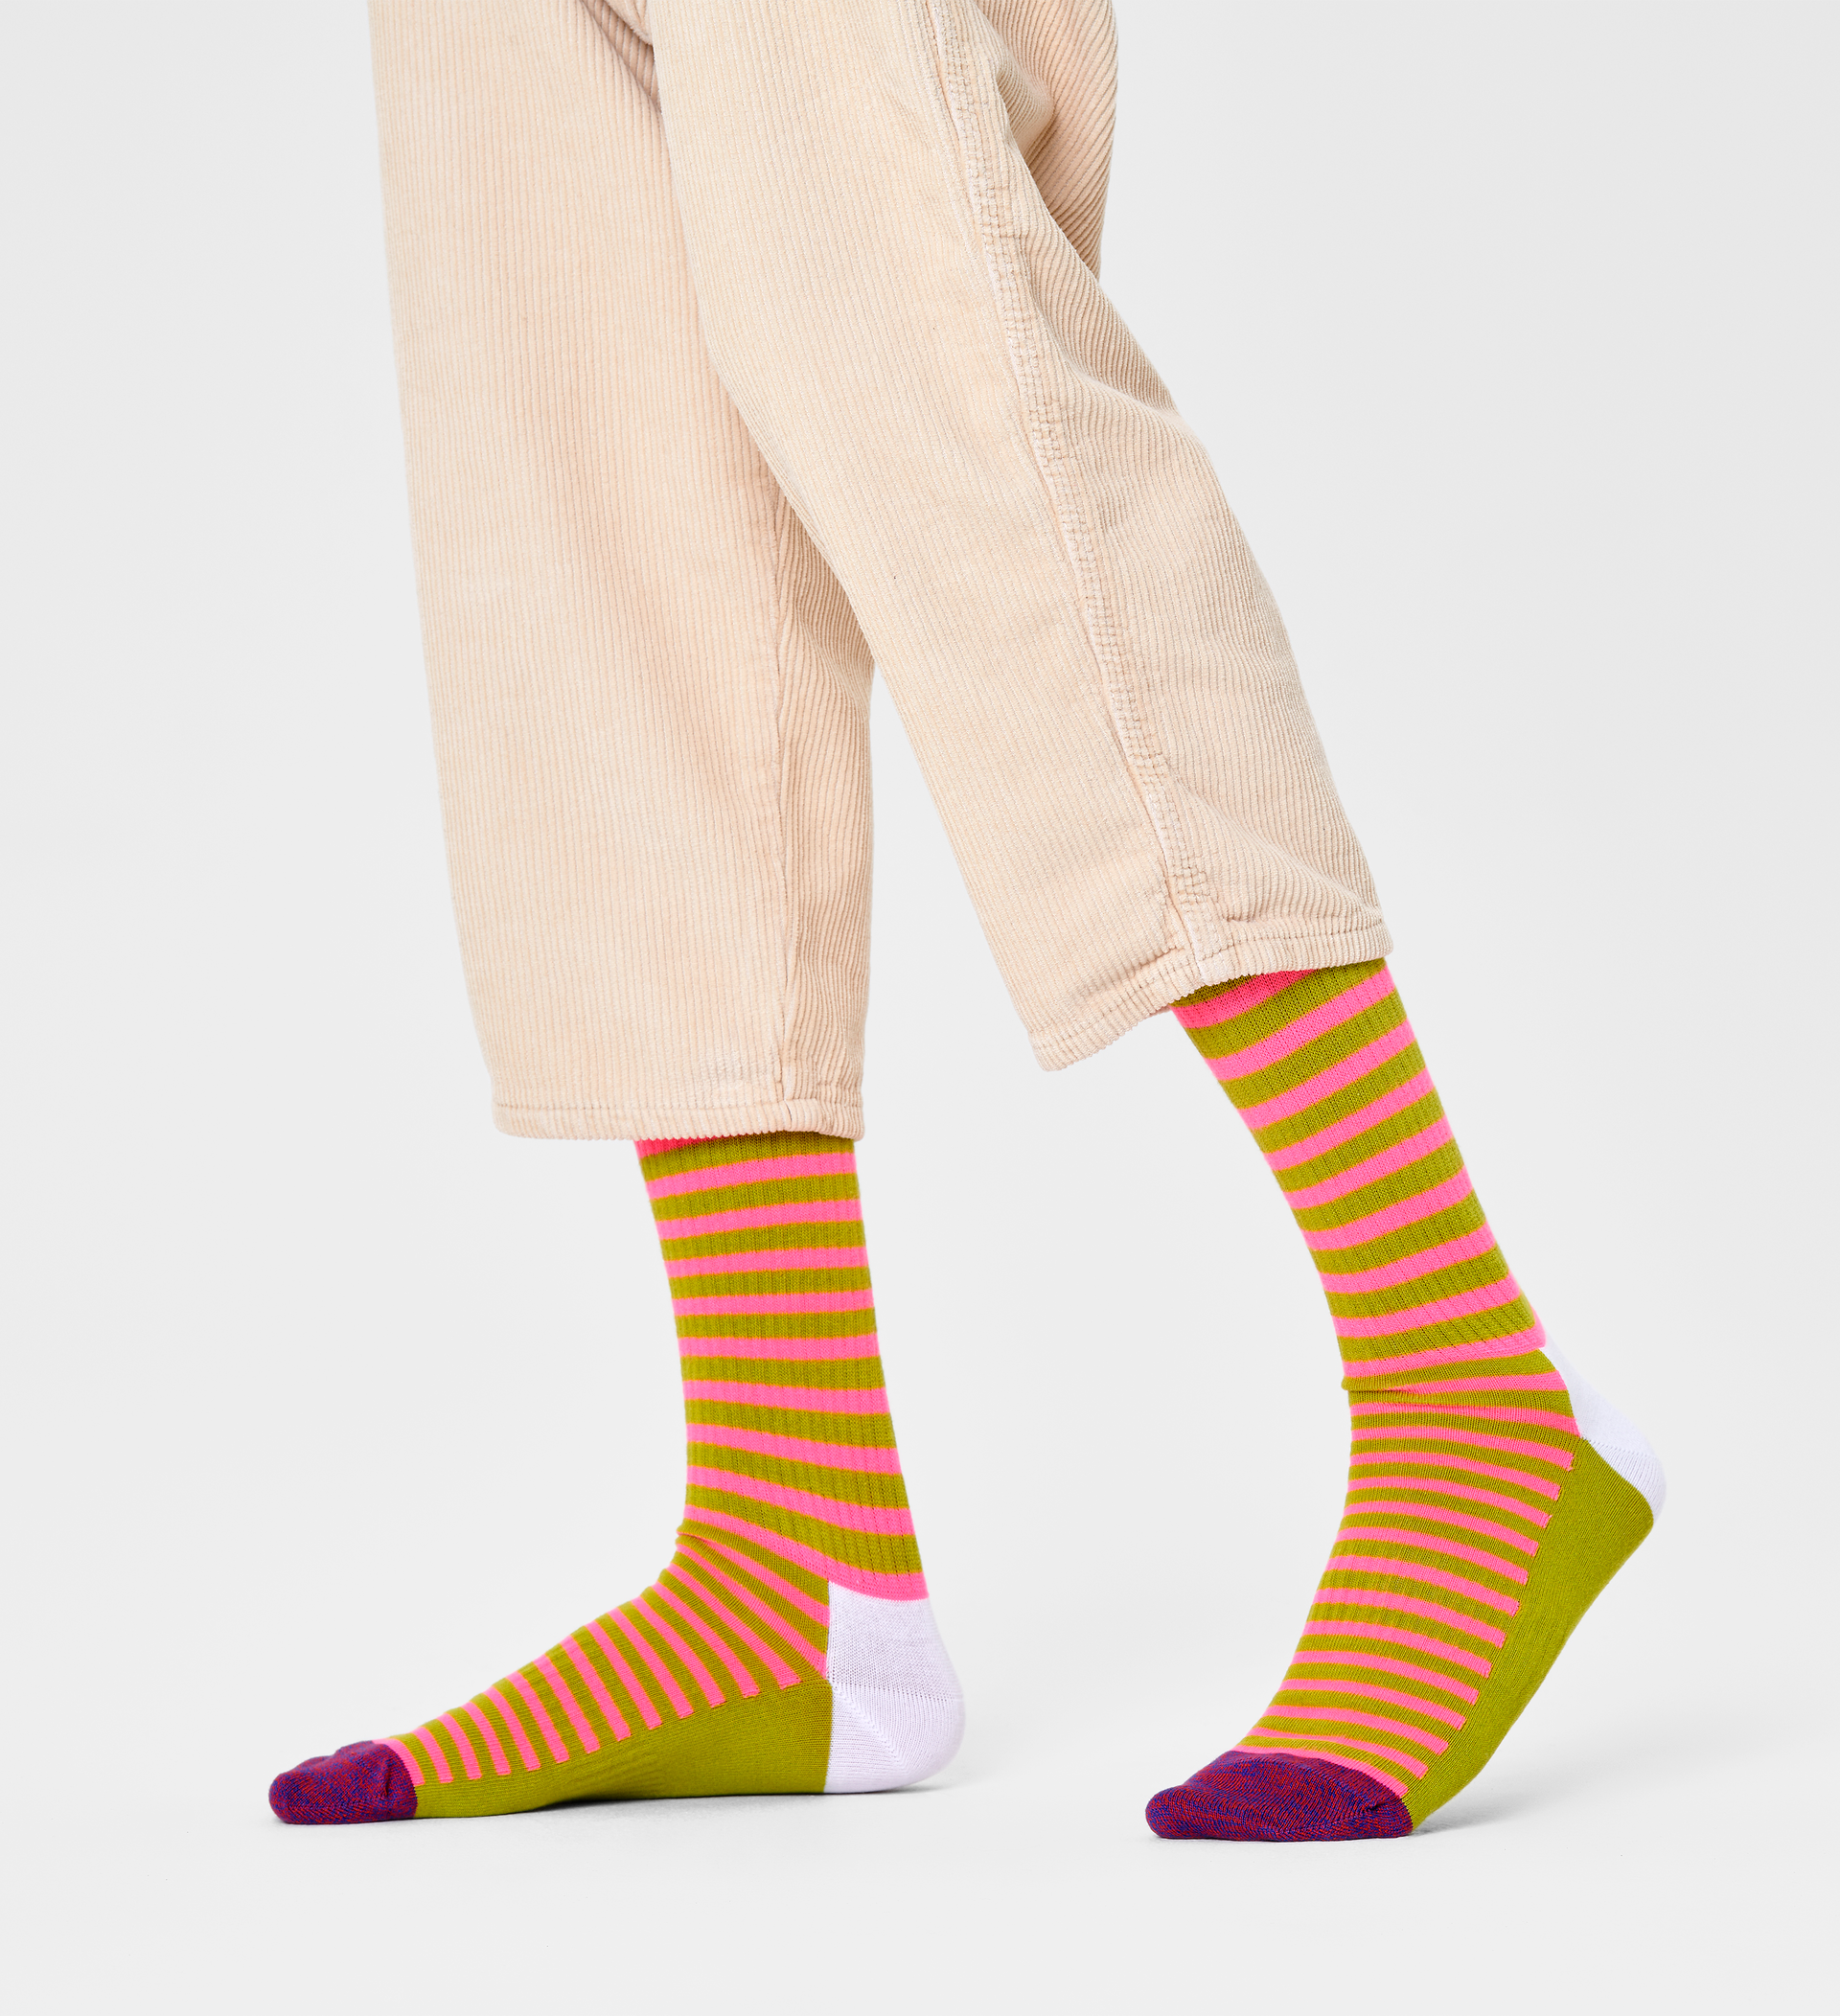 Authentic Happy Socks Men's 4 paire assorties motifs taille 10-13 